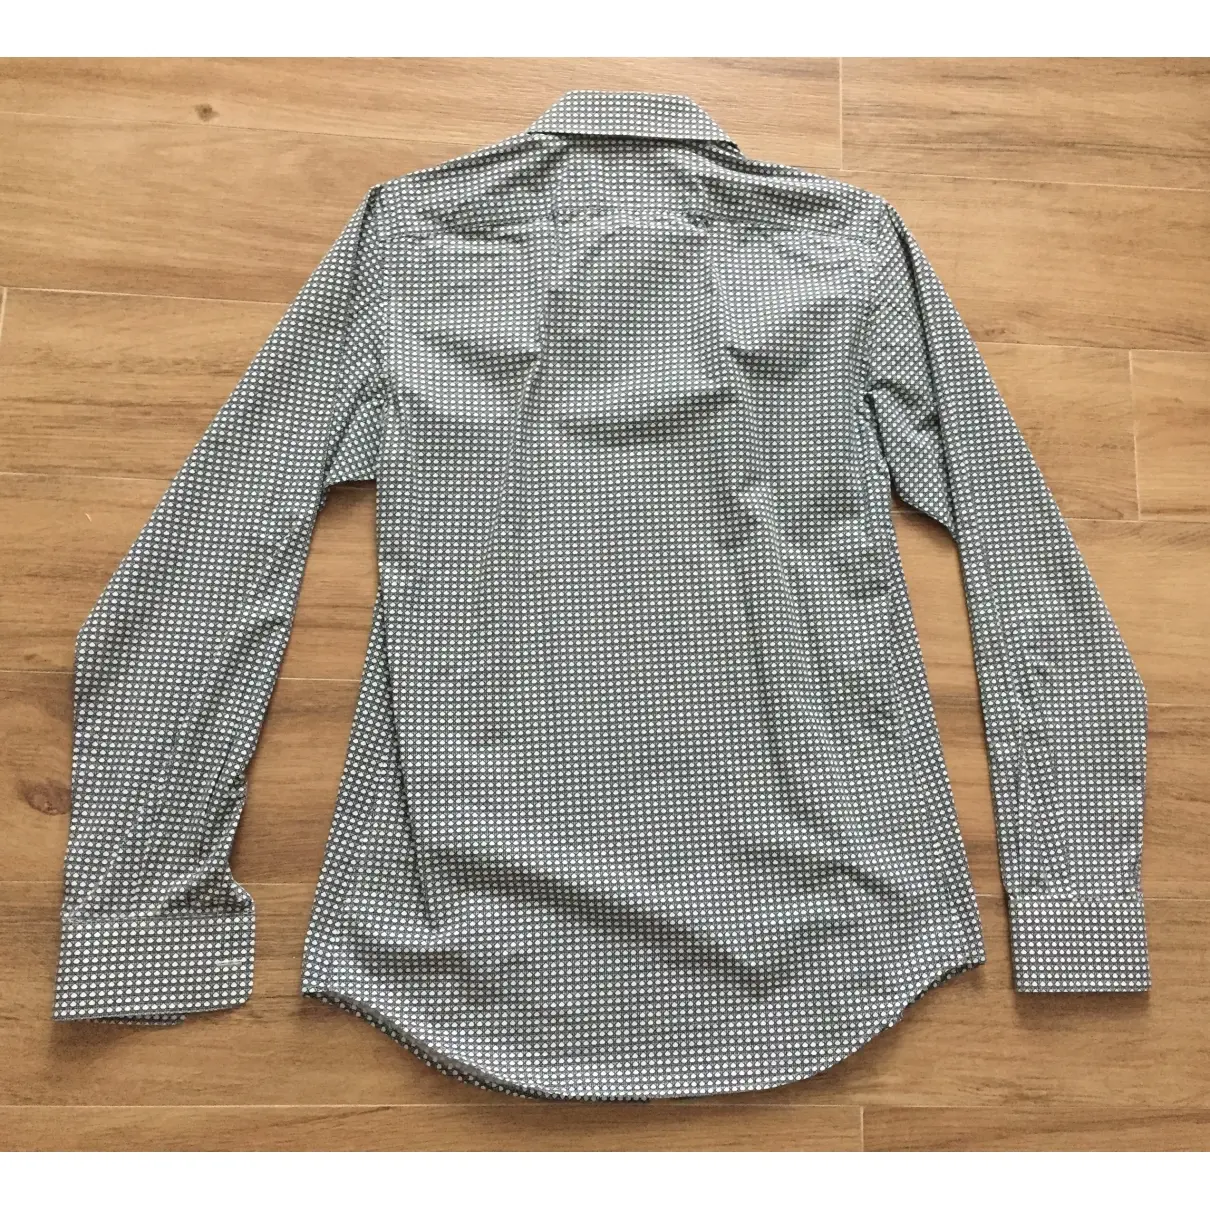 Yves Saint Laurent Shirt for sale - Vintage